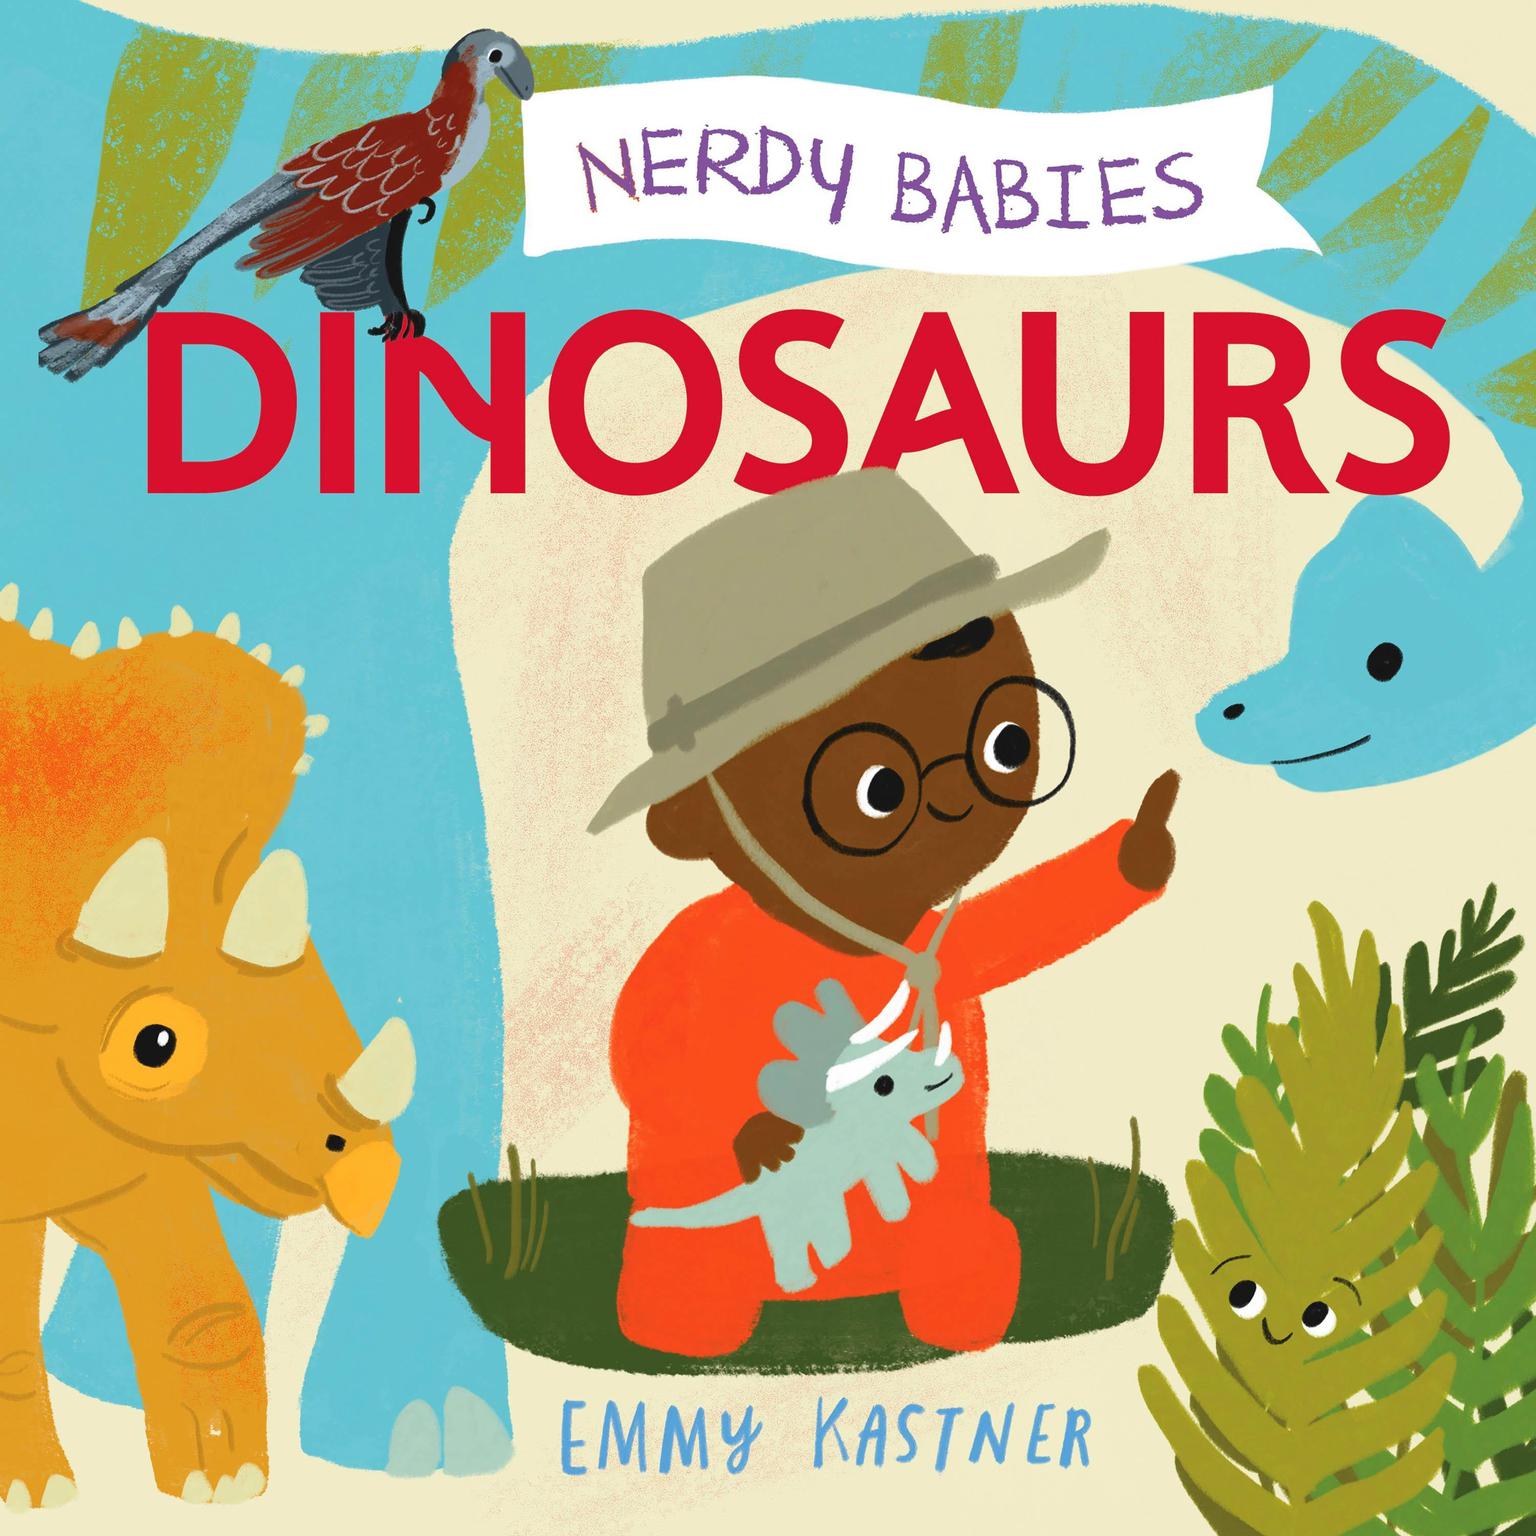 Nerdy Babies: Dinosaurs Audiobook, by Emmy Kastner